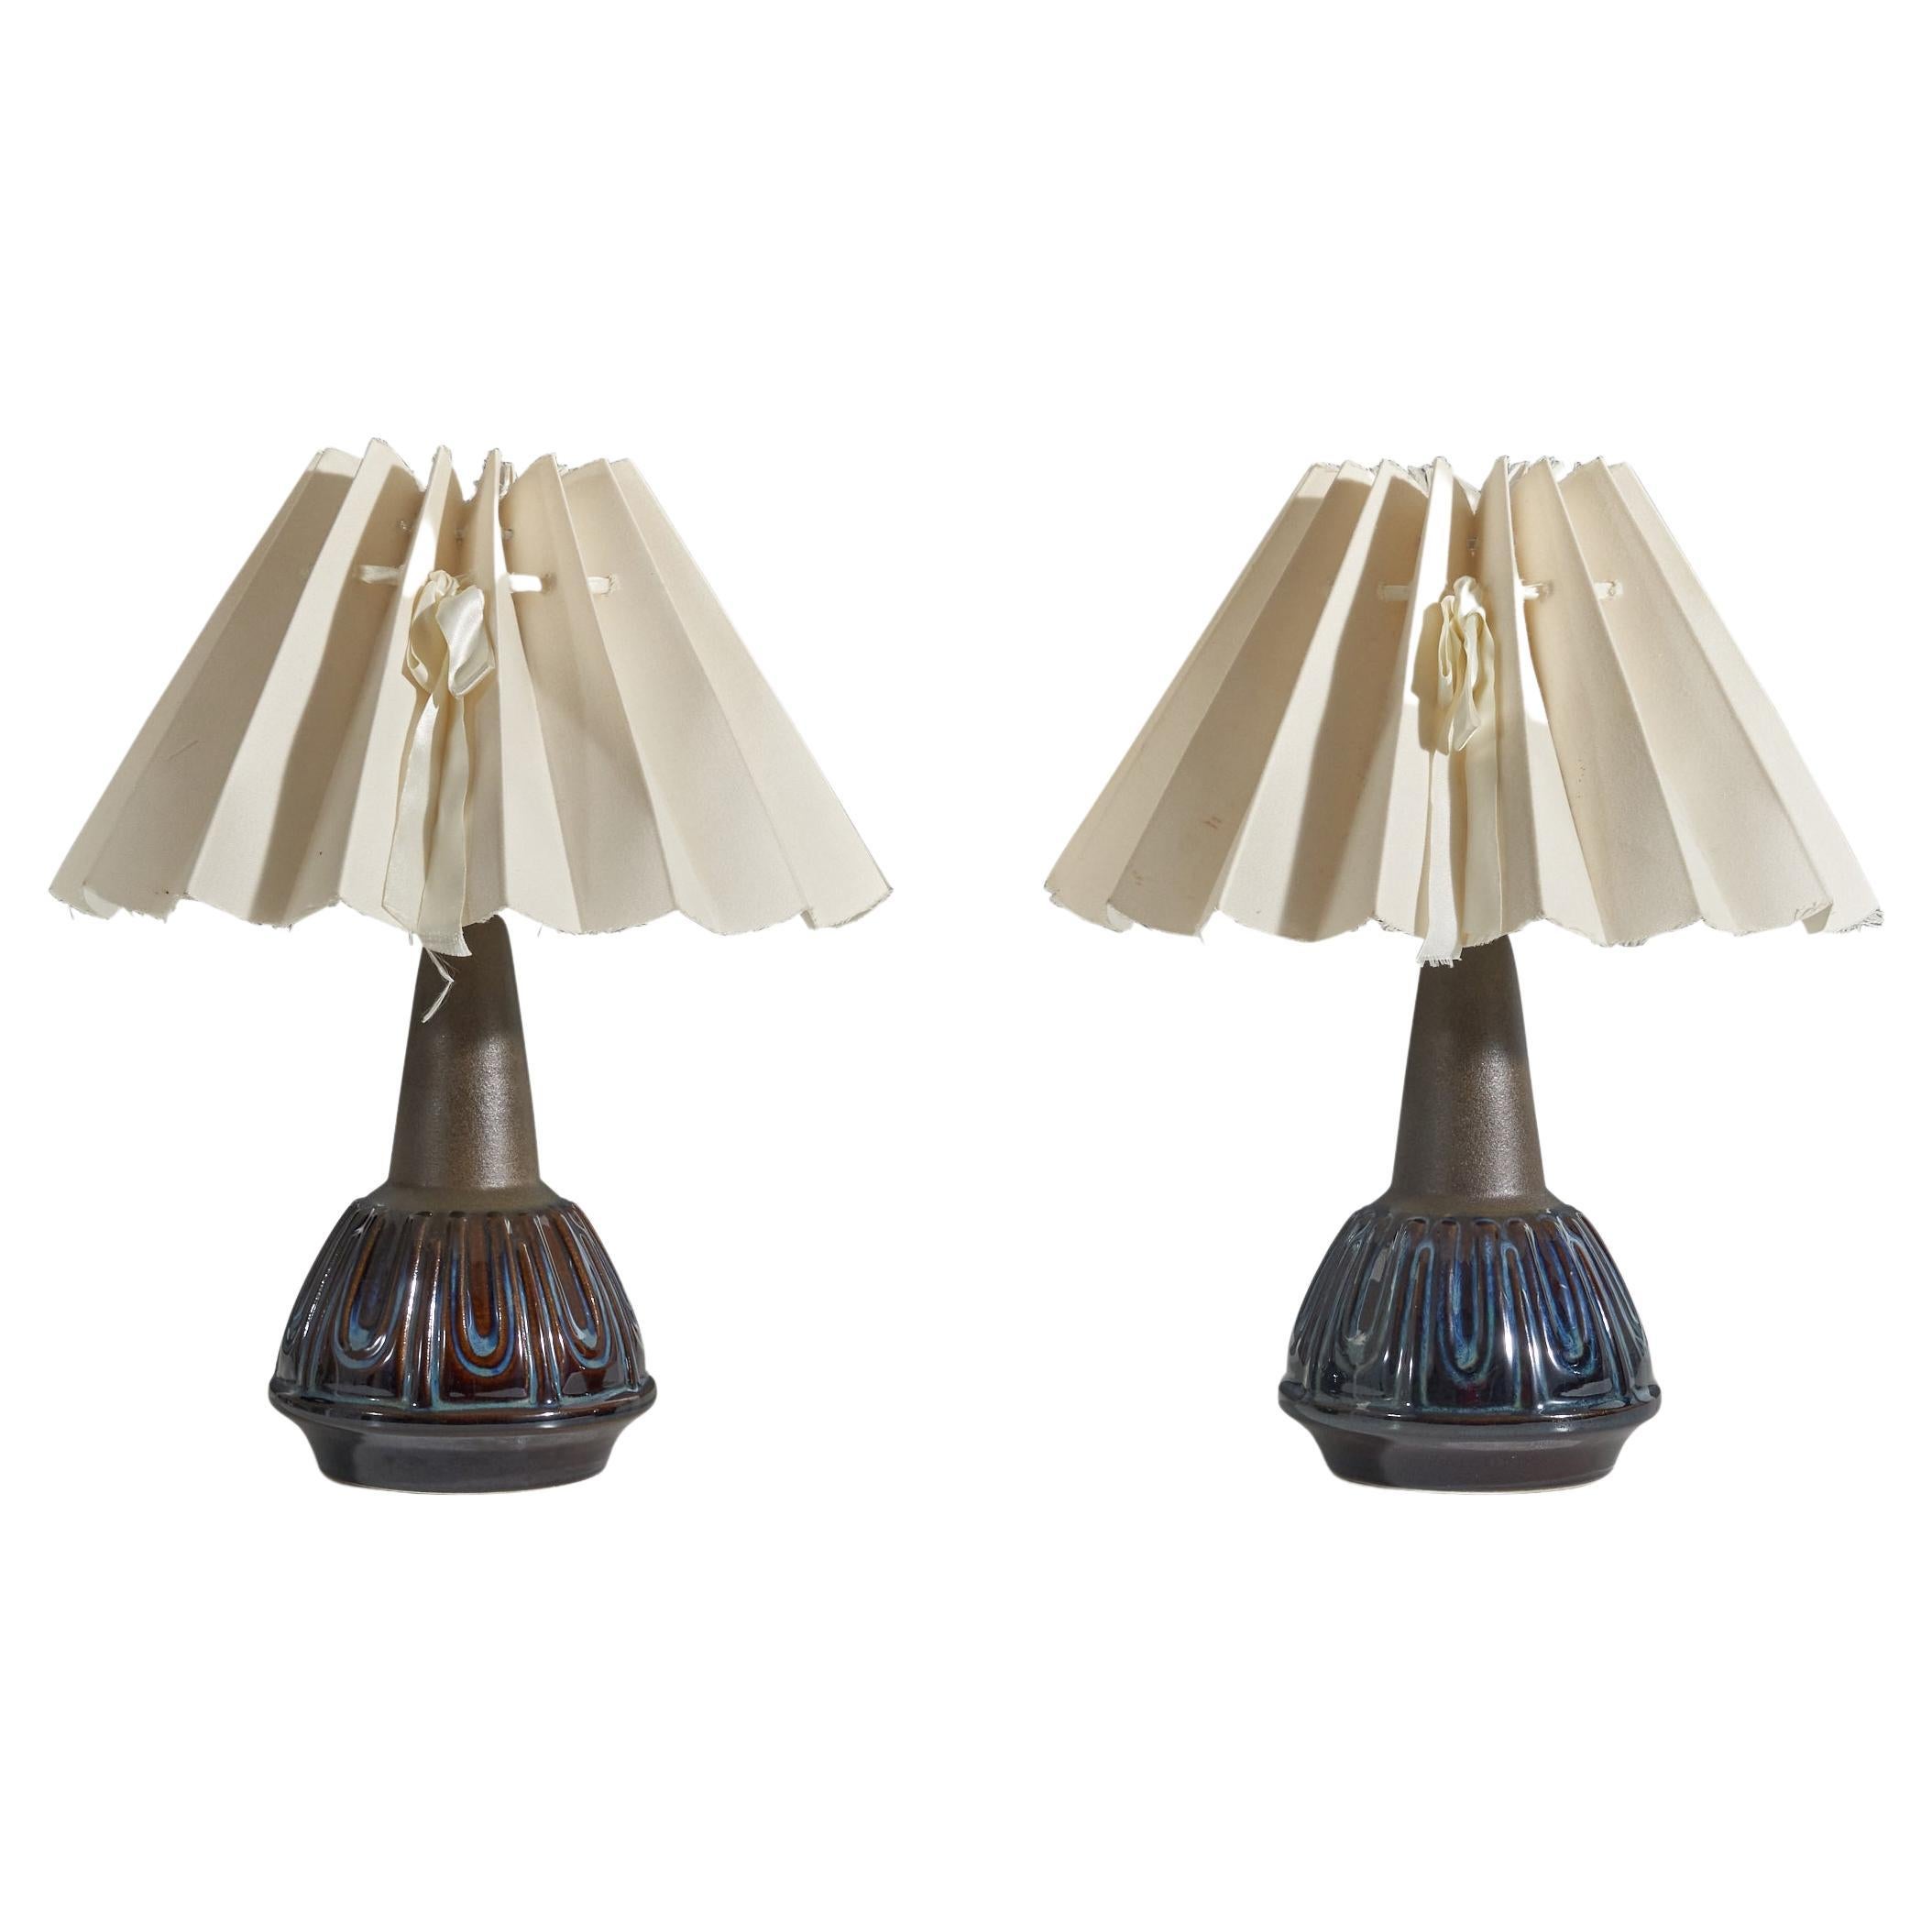 Søholm Stentøj, Table Lamps, Glazed Stoneware, Fabric, Bornholm, Denmark, 1960s For Sale